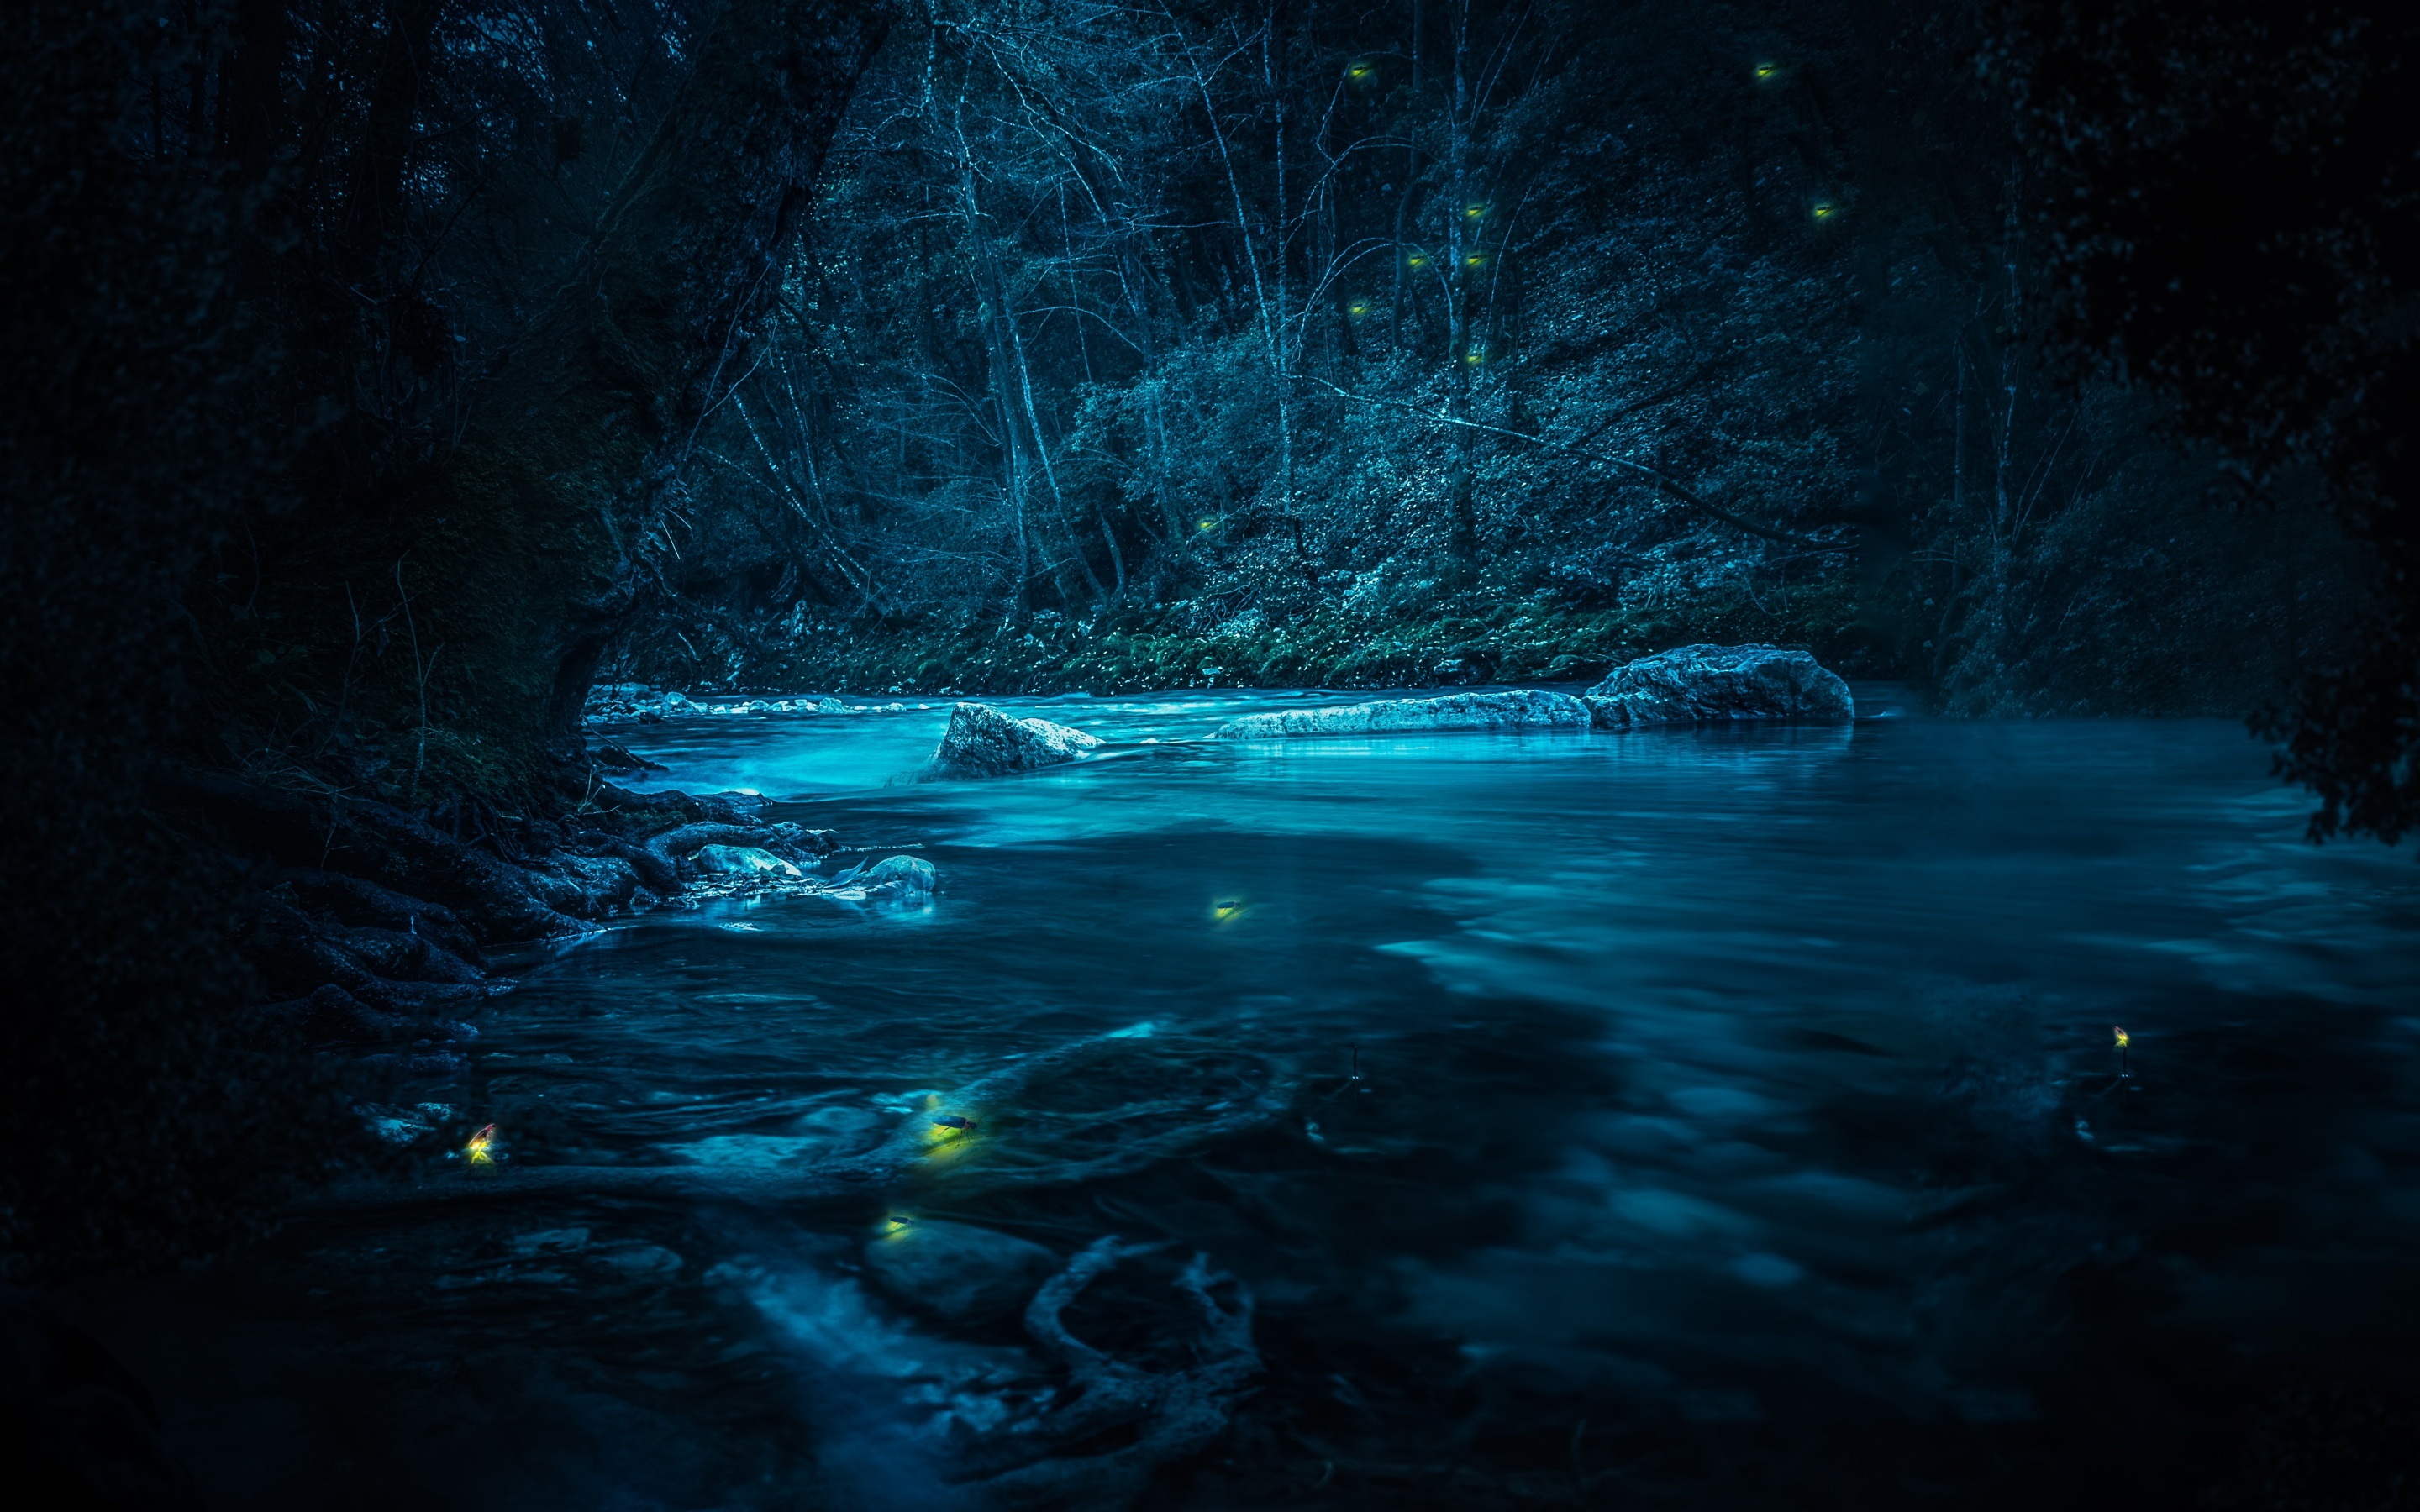 Forest 4K Wallpaper, River, Night, Dark, Magical, Crescent Moon, Blue